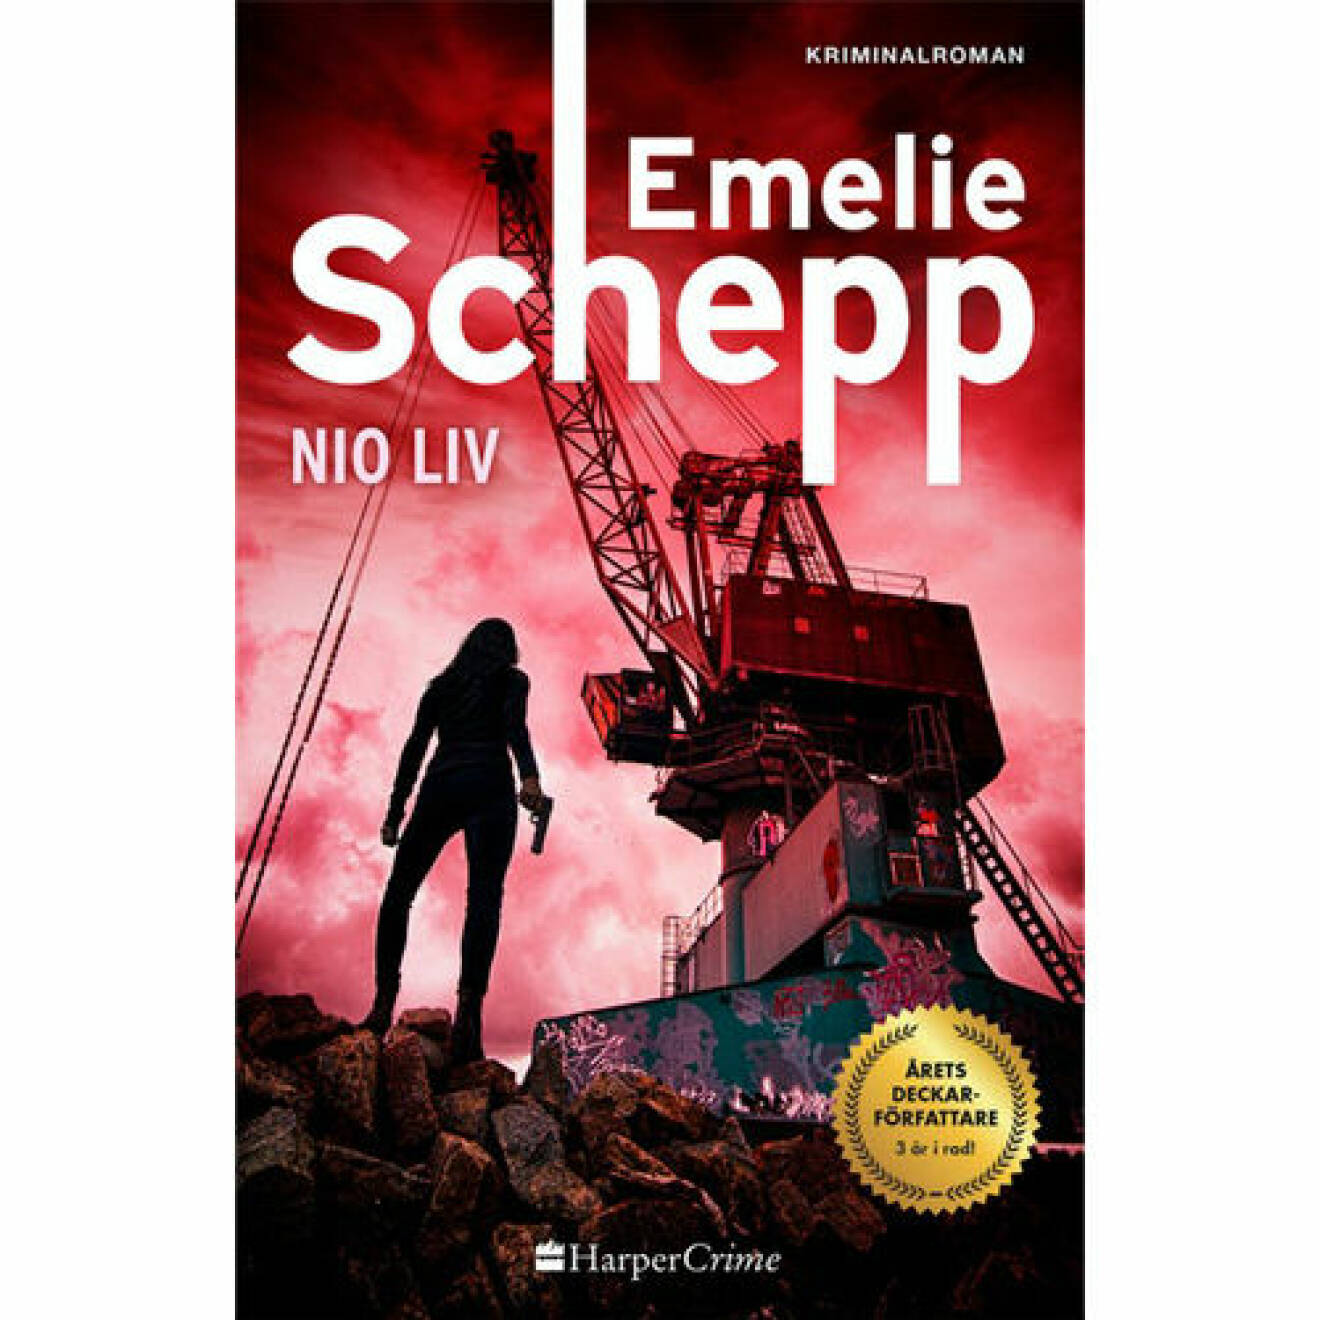 Emelie Schepp nio liv